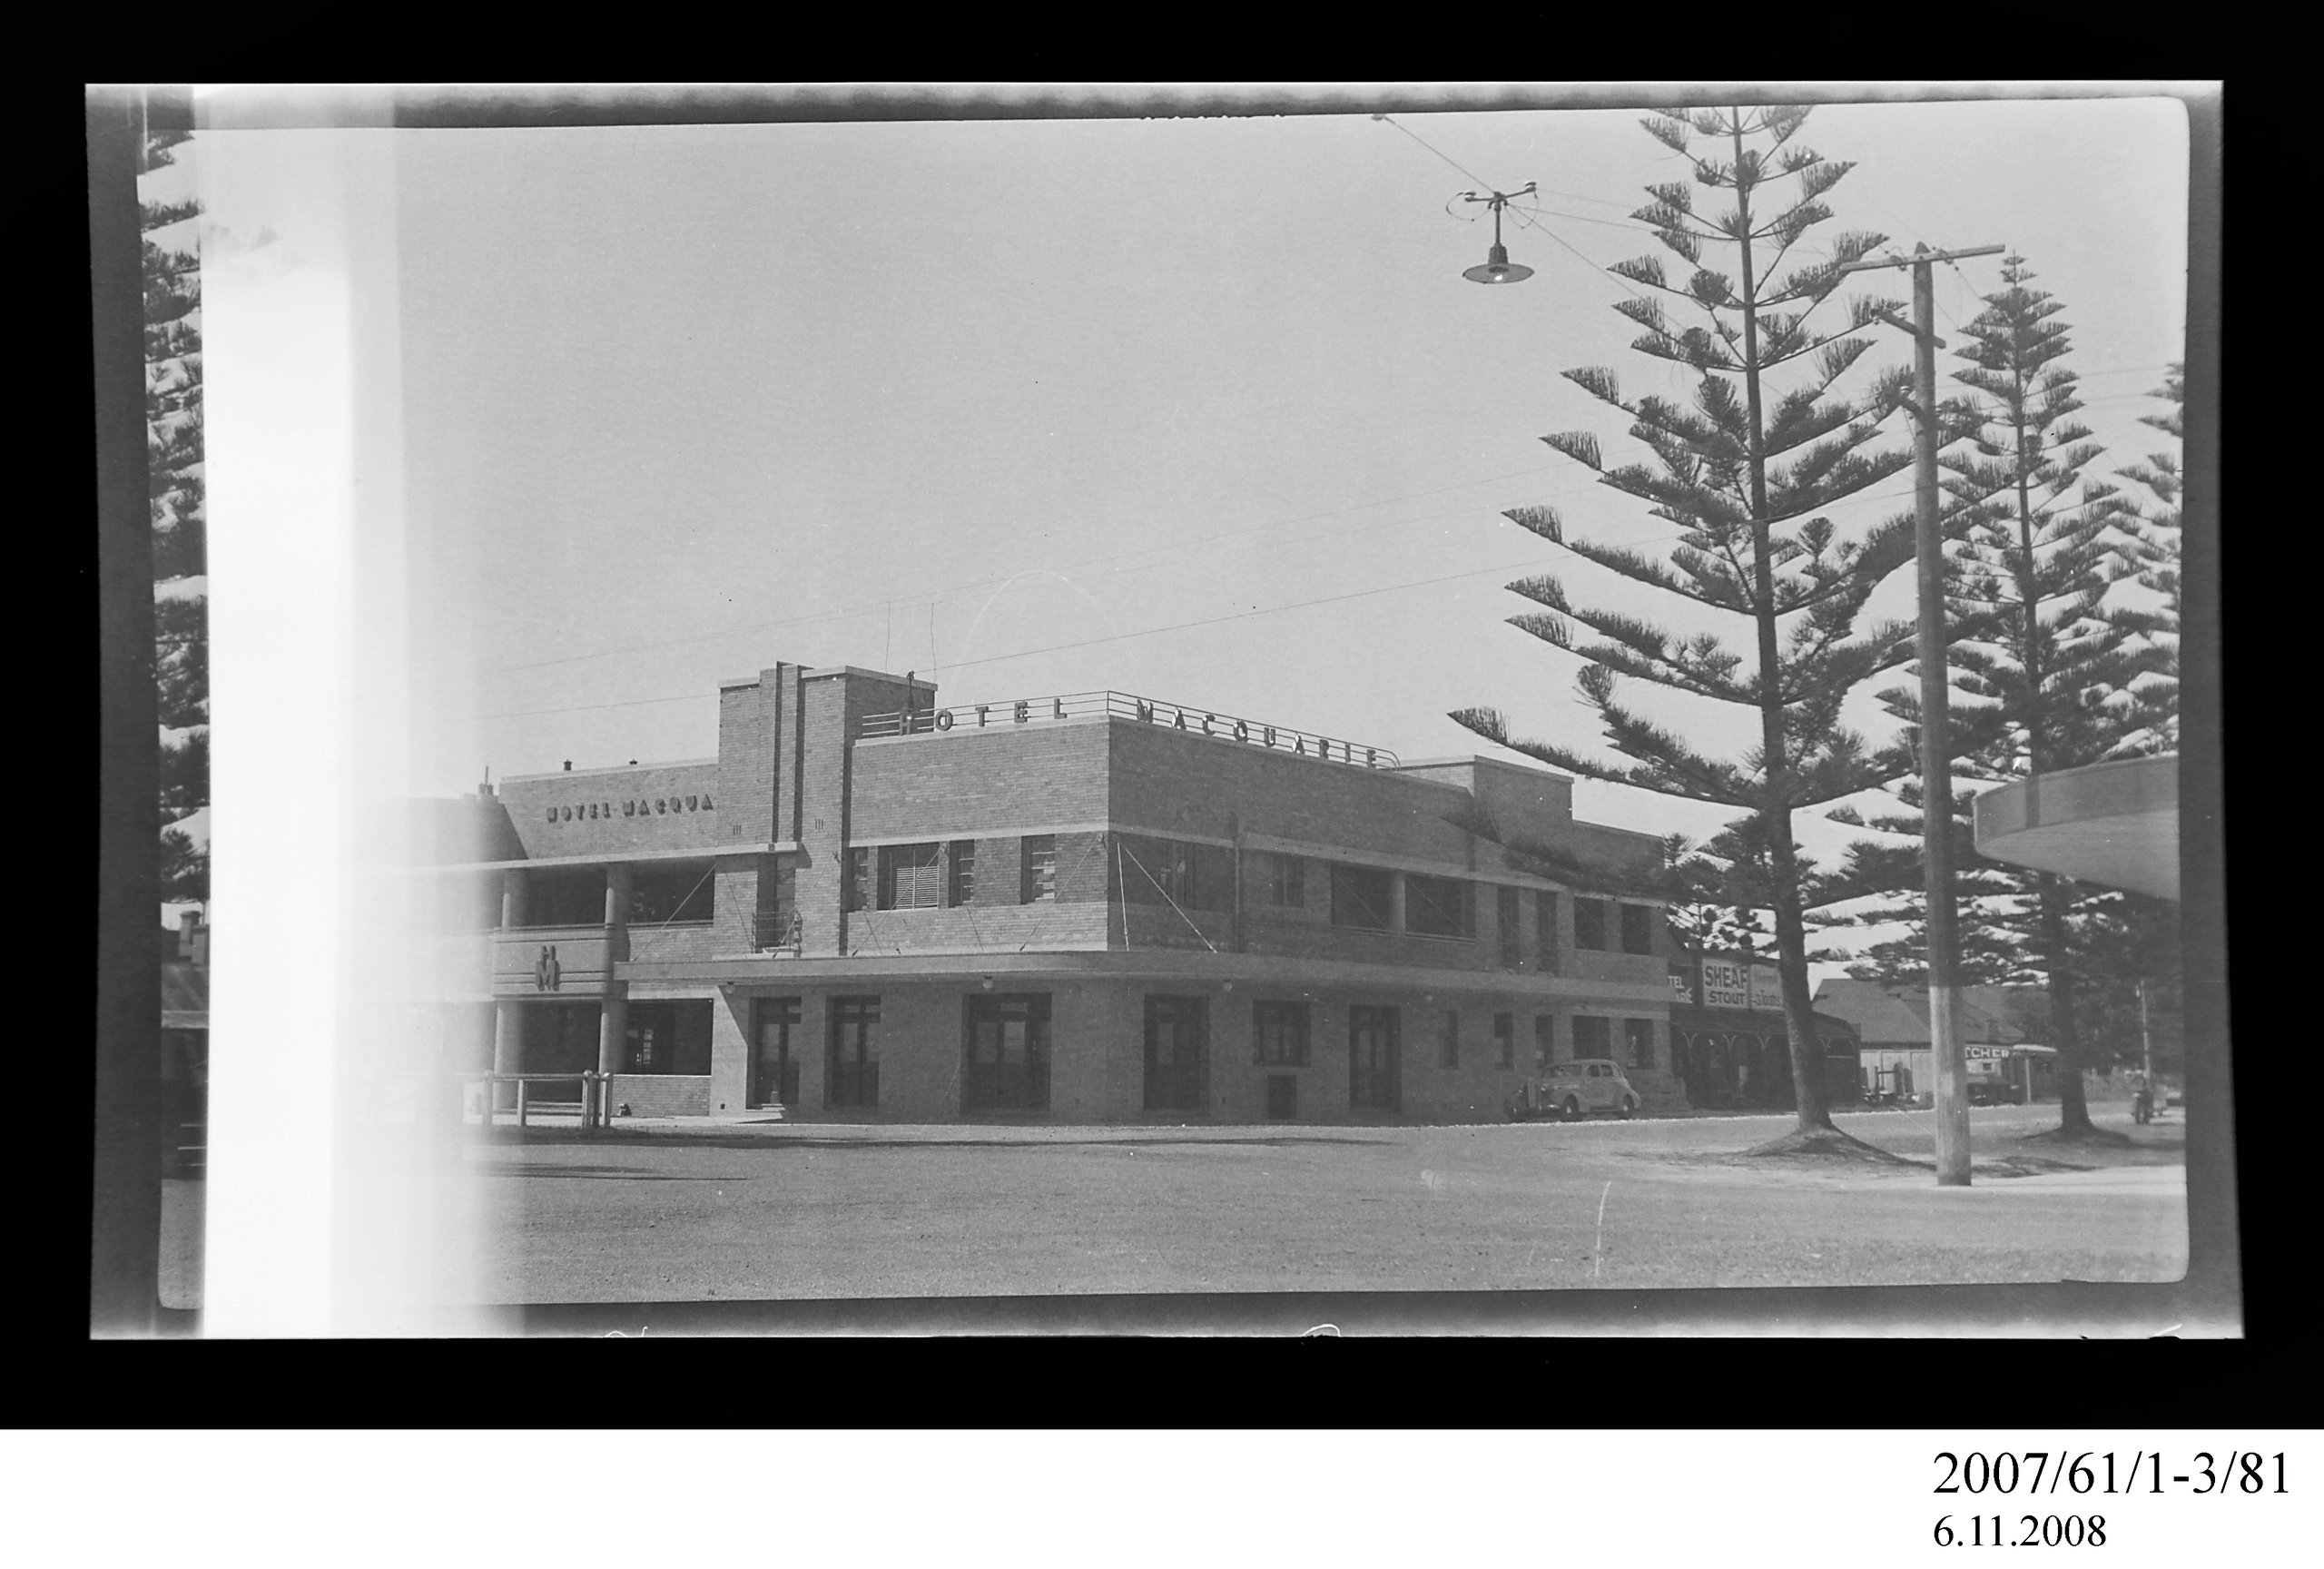 Negative of Hotel Macquarie exterior, Port Macquarie